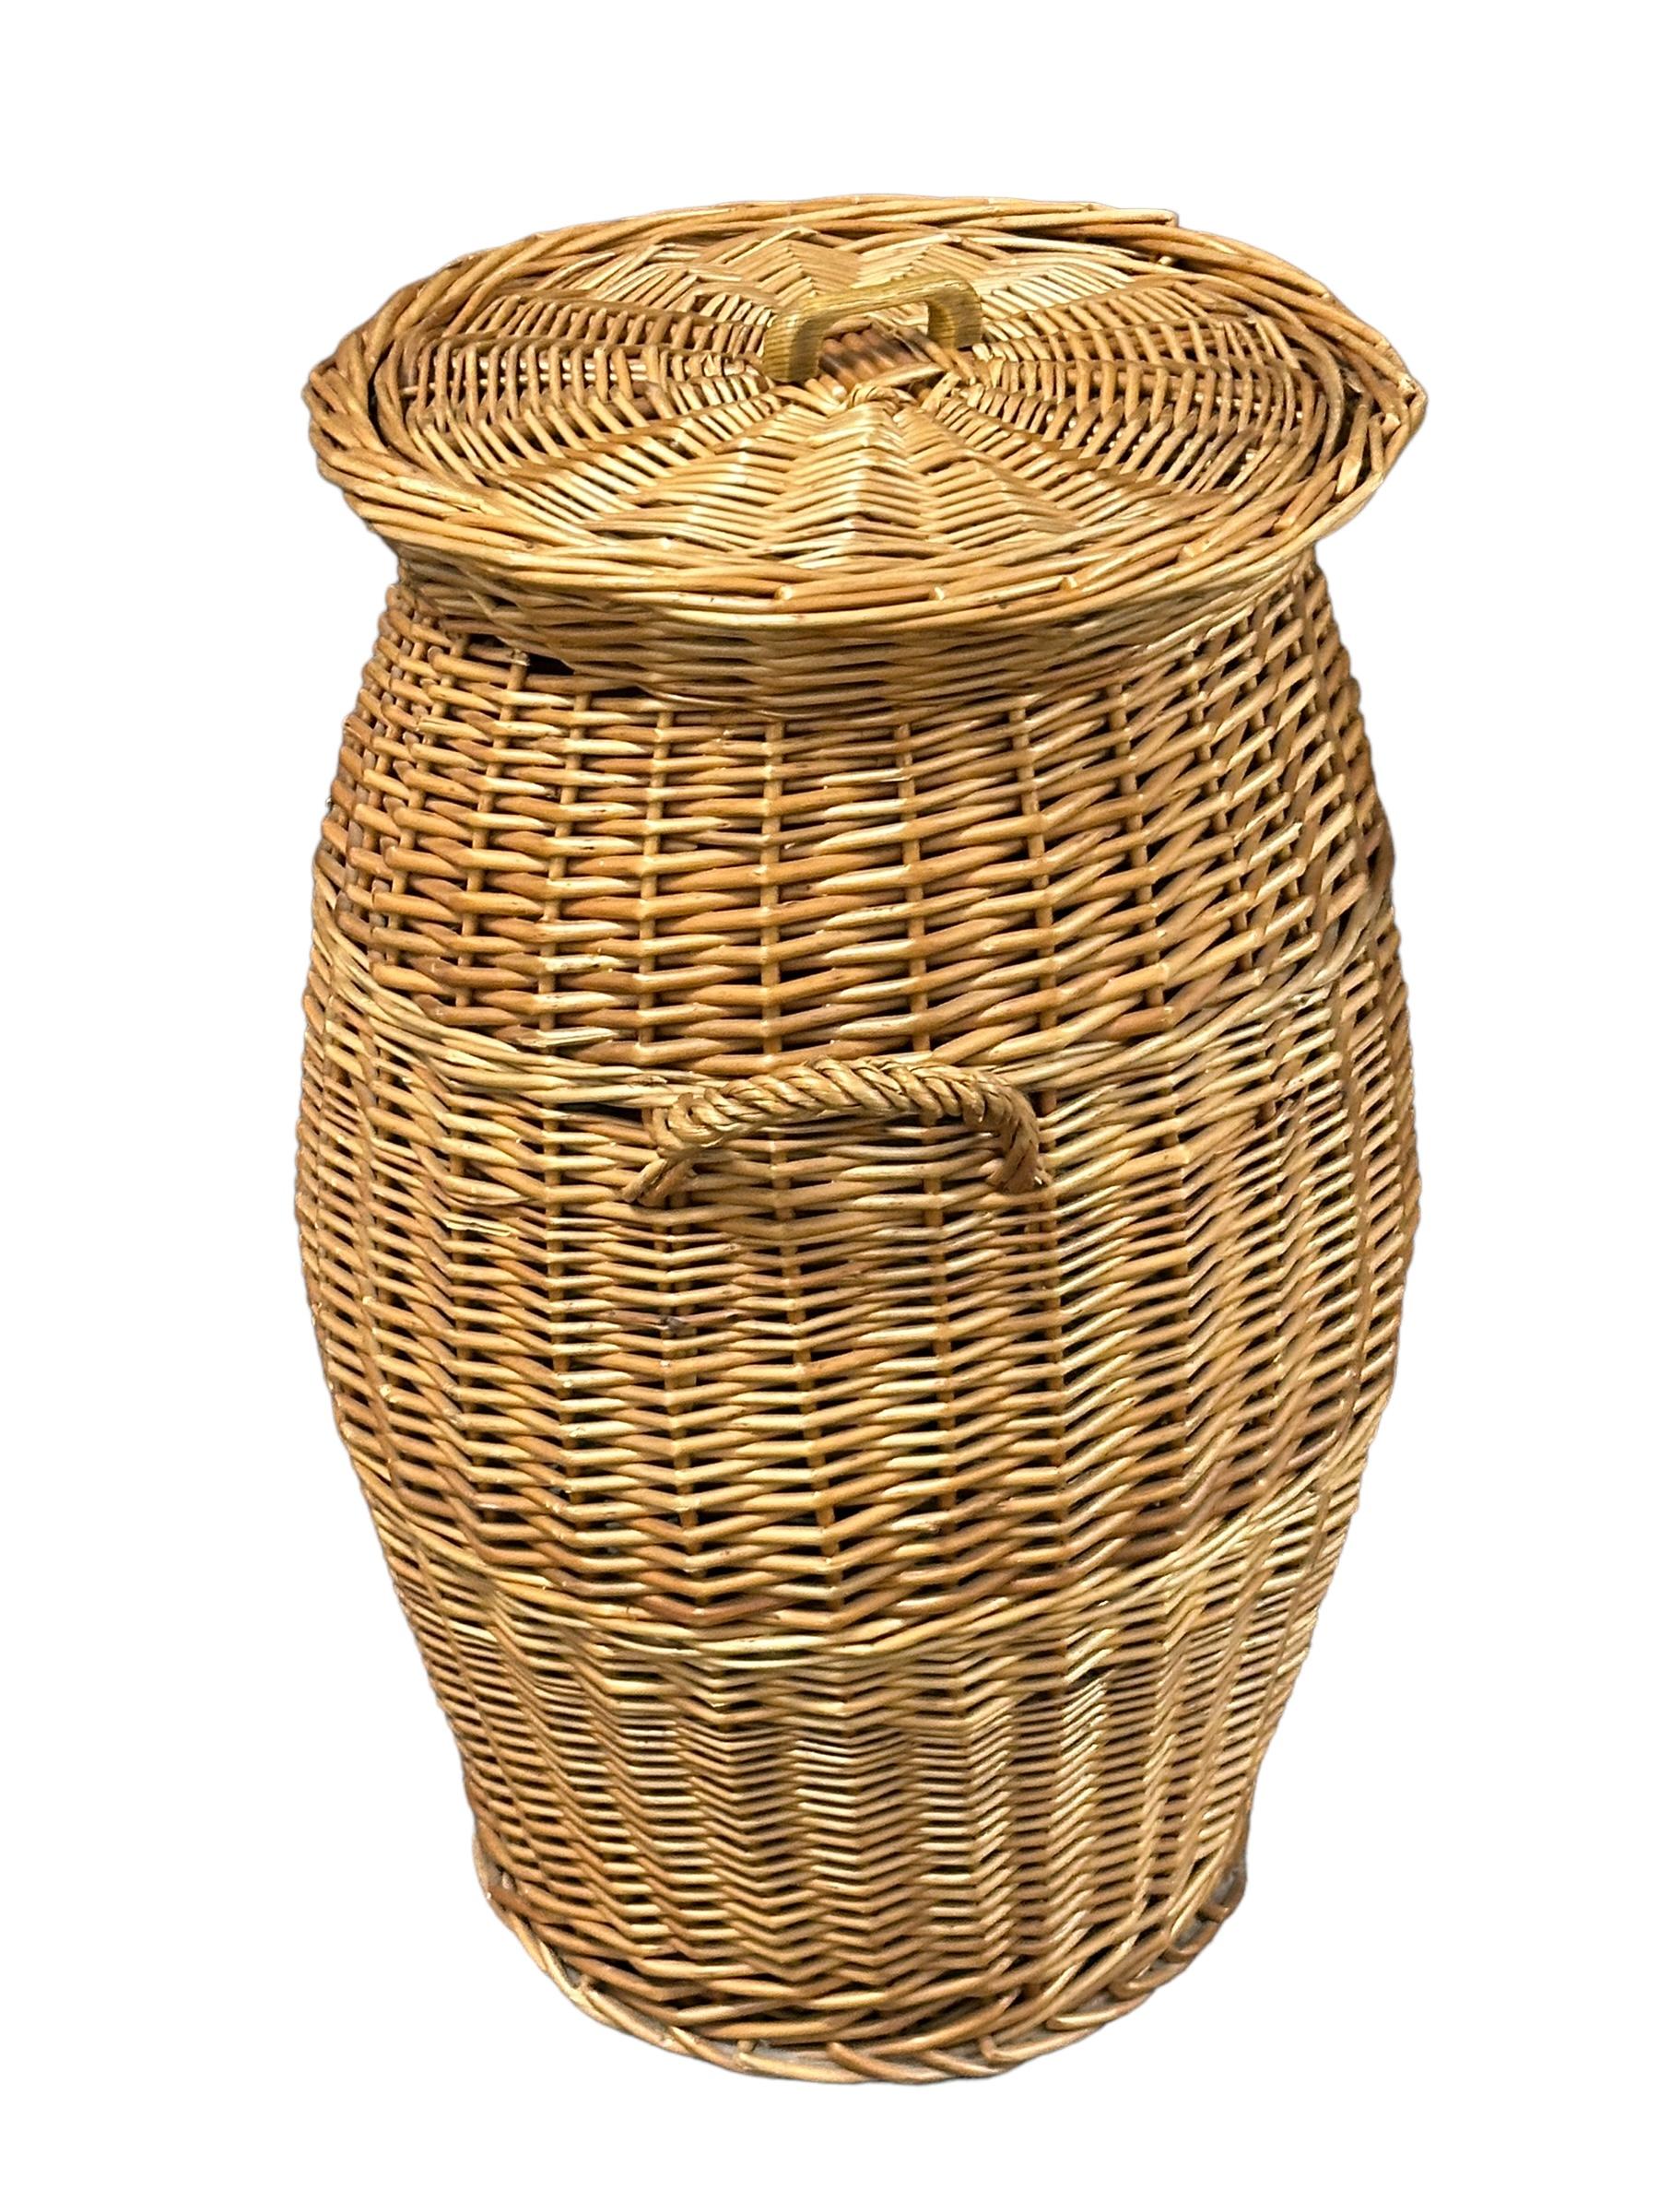 Large Vintage Midcentury Wicker Laundry Basket Hamper, 1970s, German For Sale 4